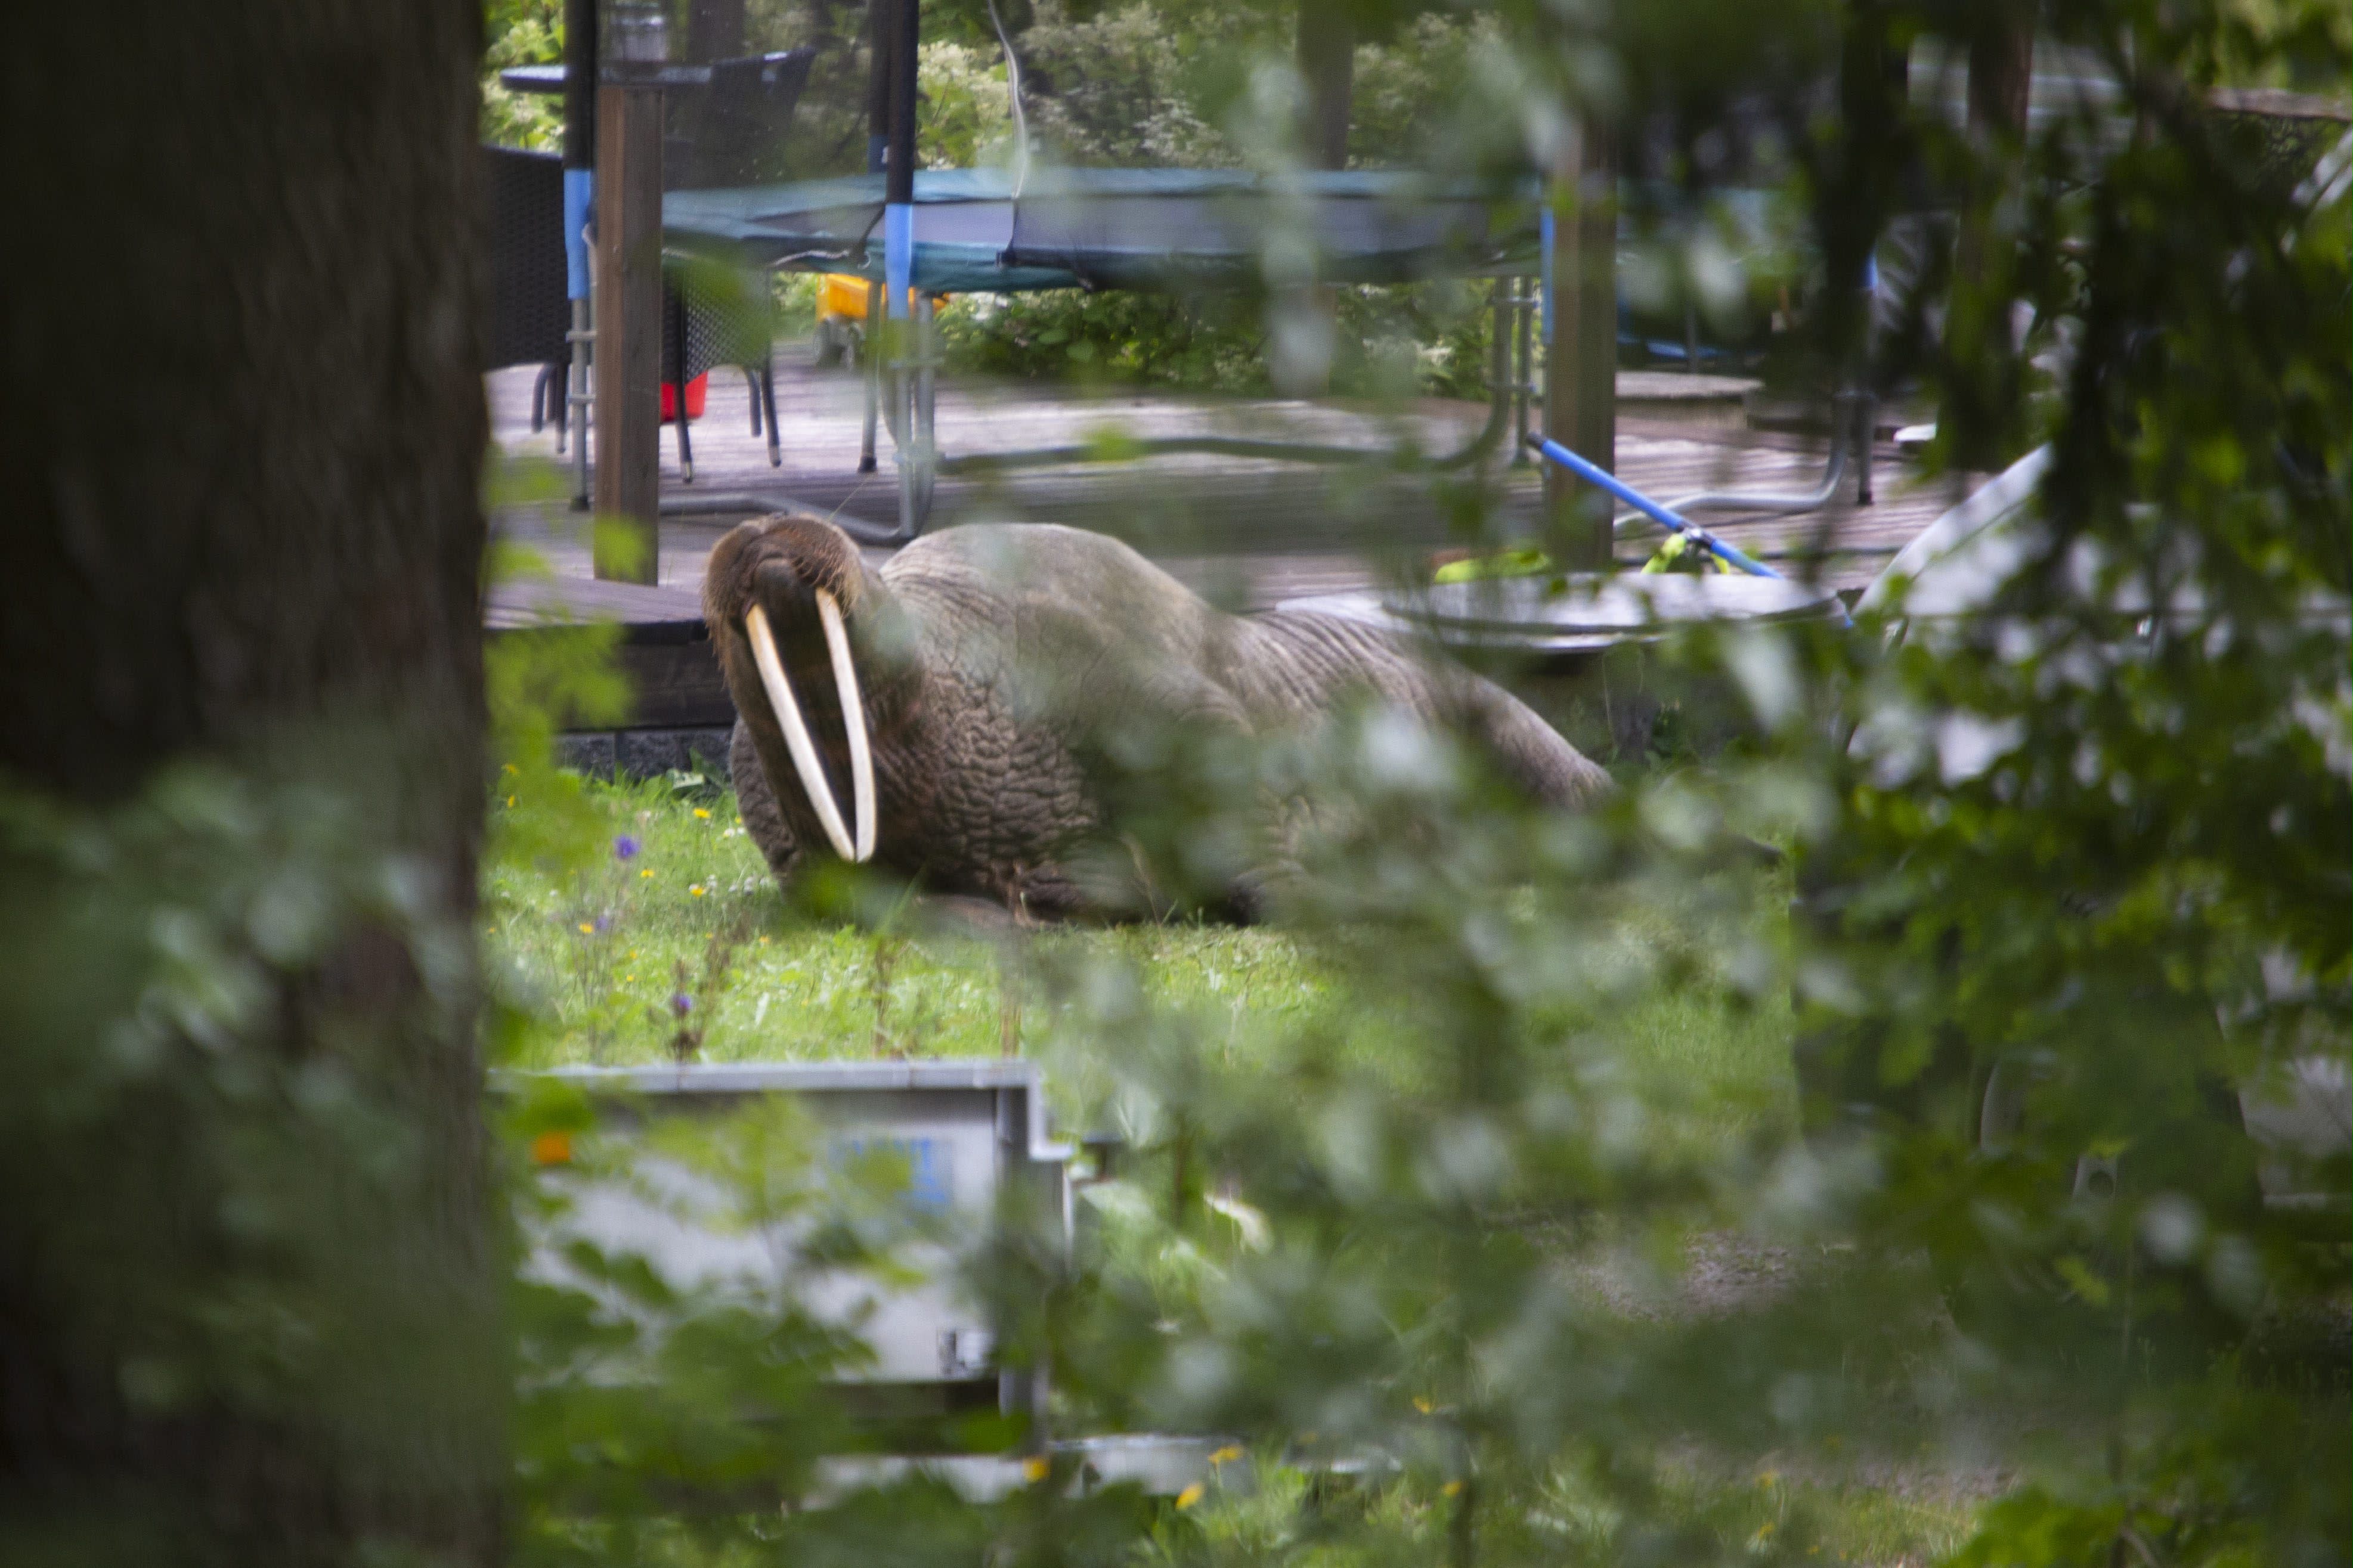 Helsinki Zoo is preparing to handle a walrus "bad shape"